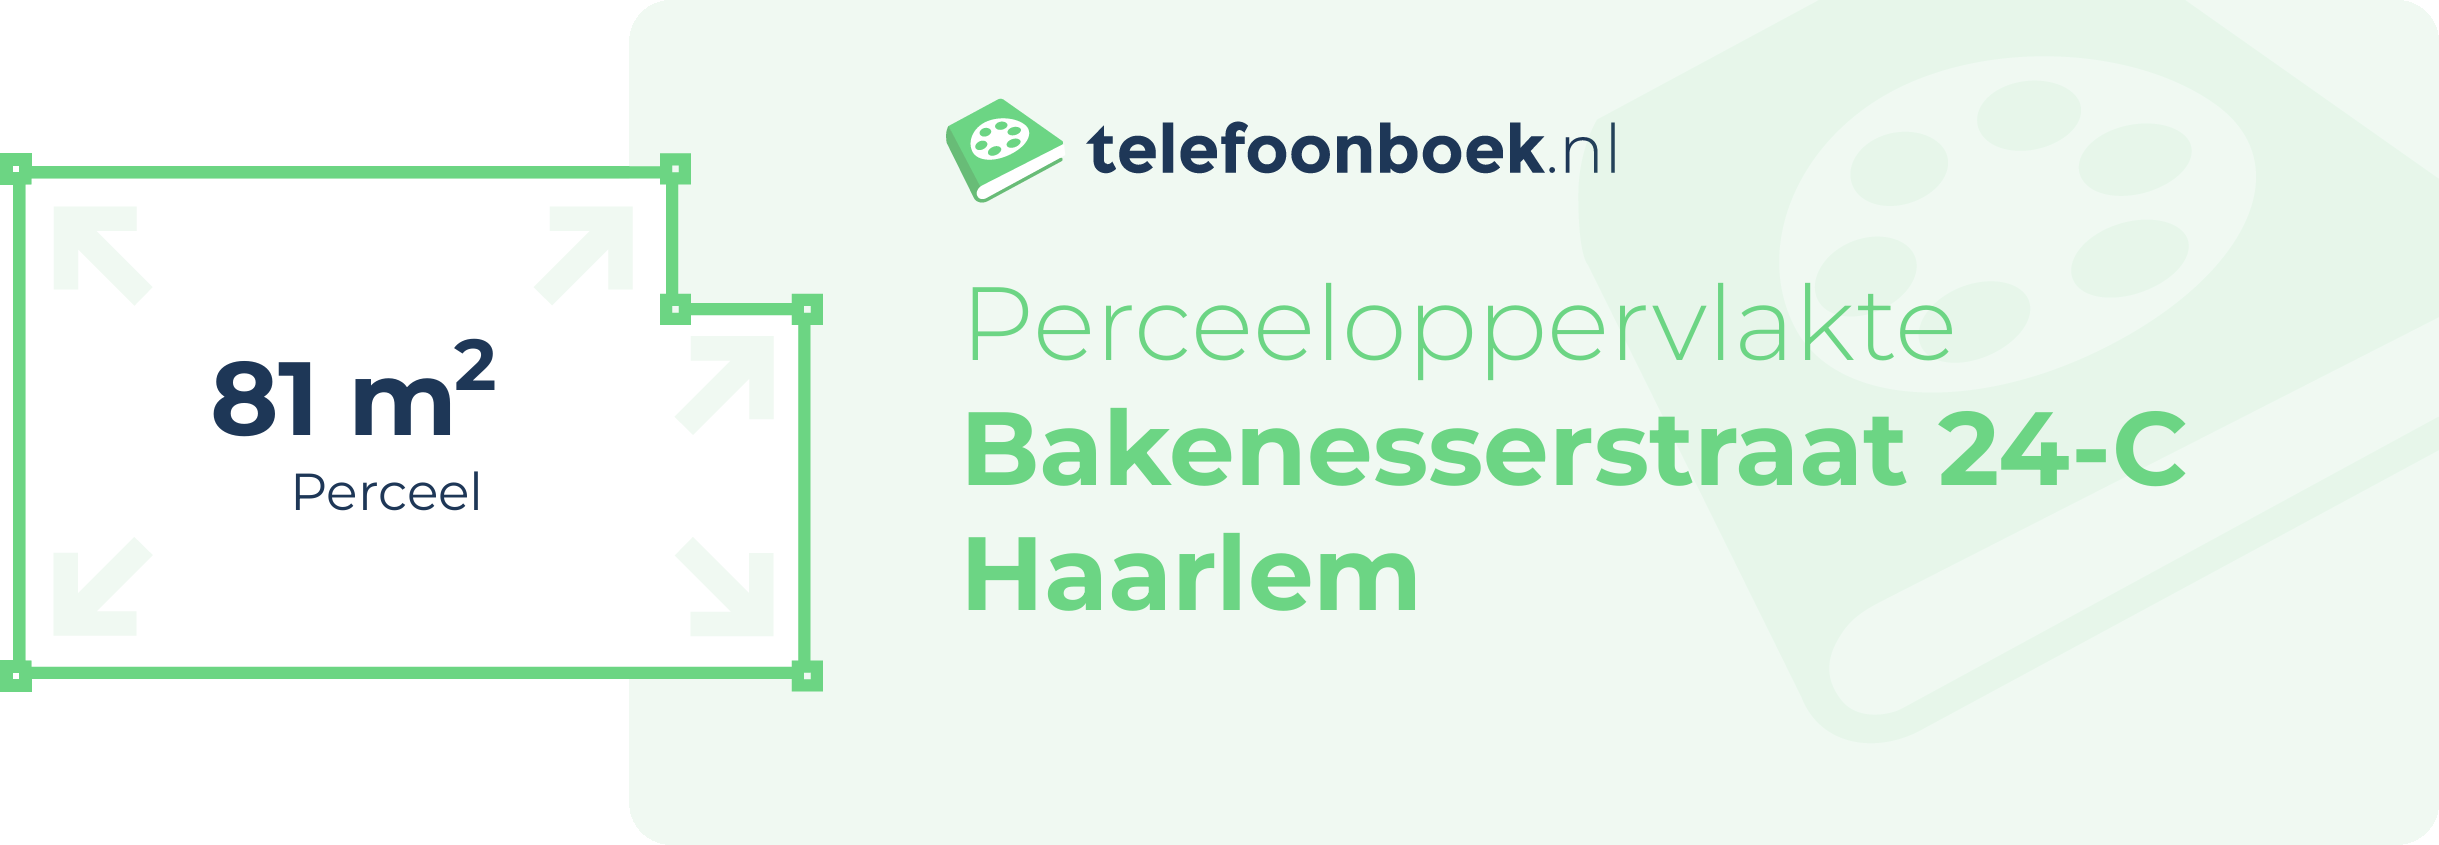 Perceeloppervlakte Bakenesserstraat 24-C Haarlem